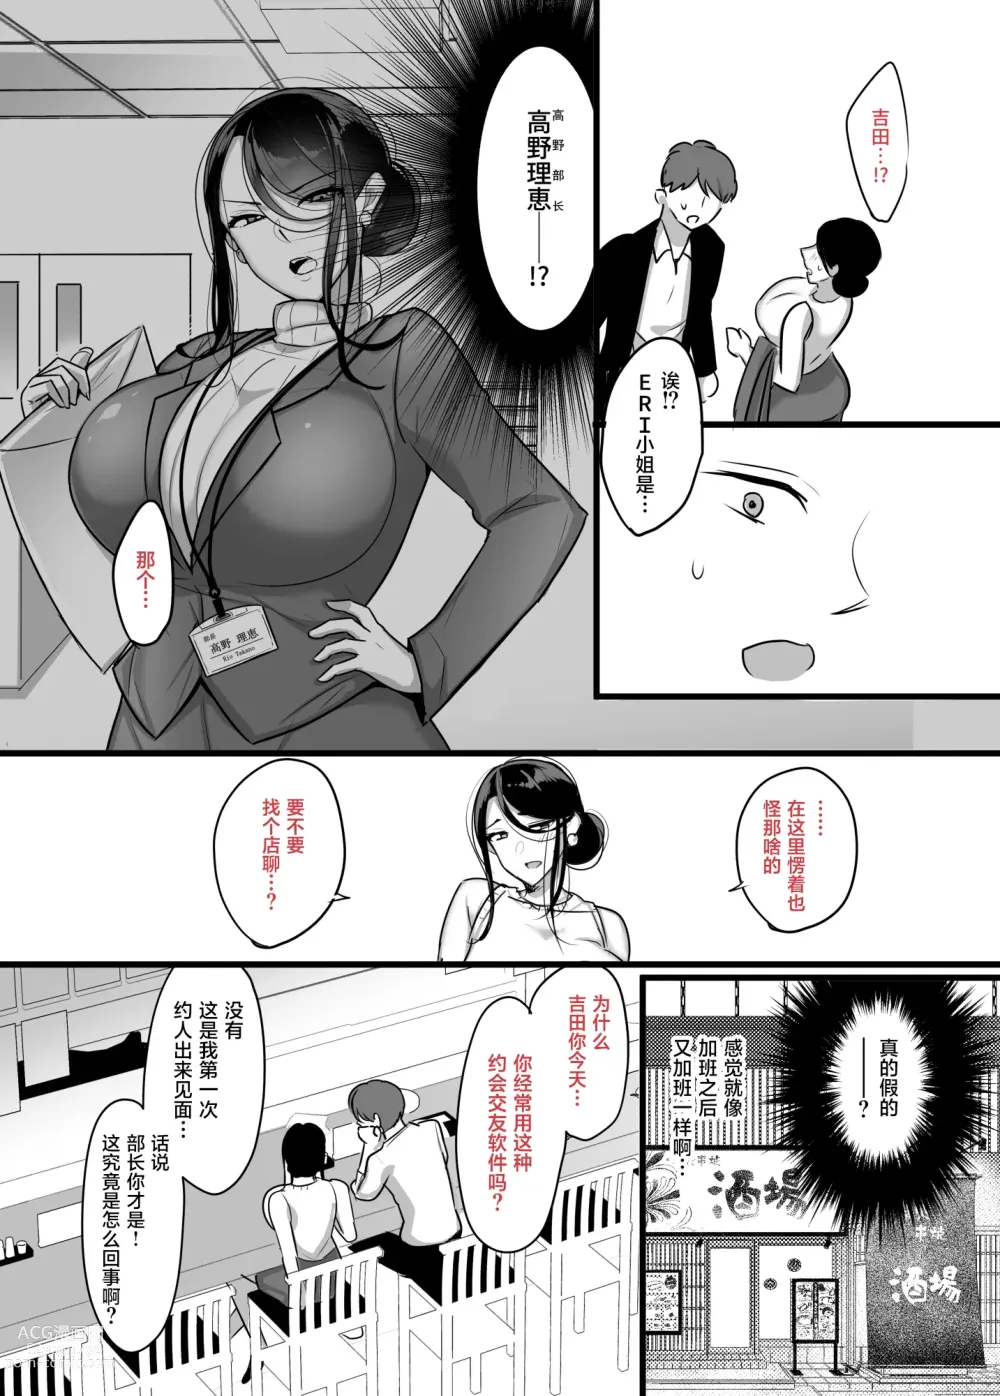 Page 9 of doujinshi 没想到那个魔鬼上司居然会成为我的炮友...